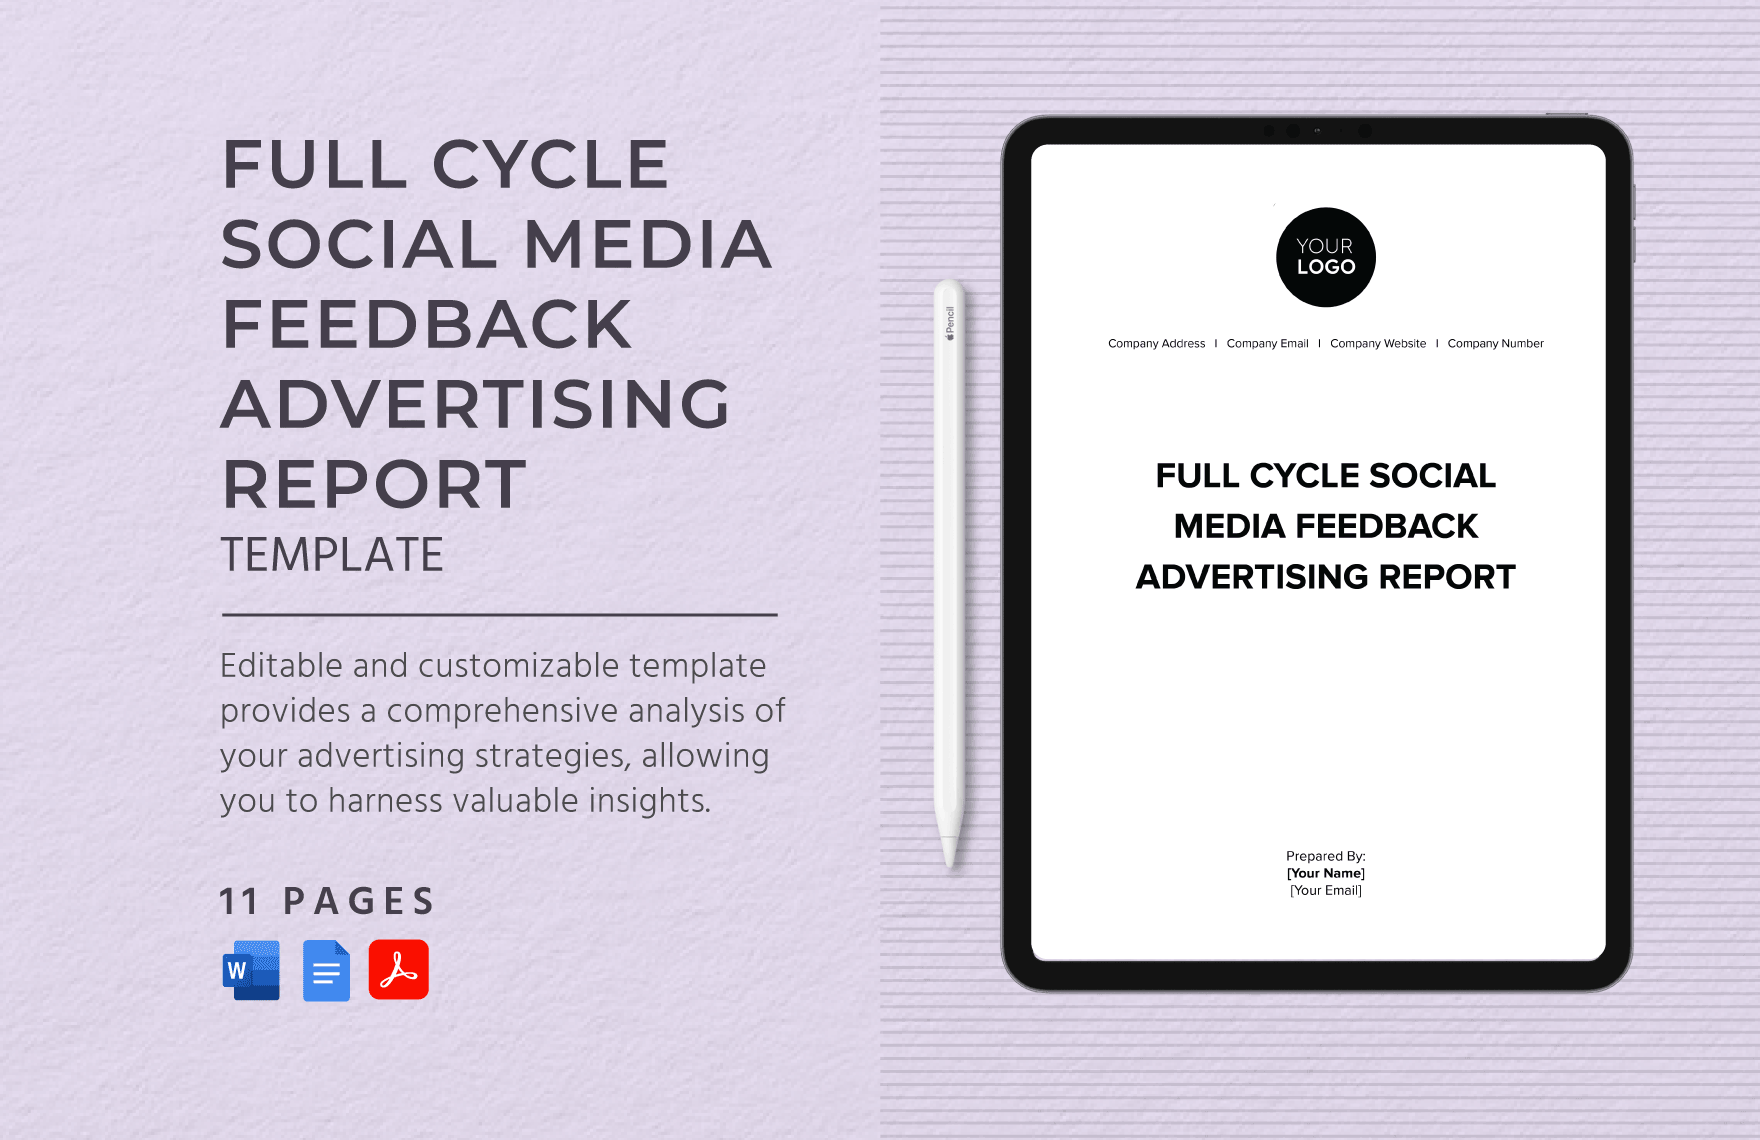 Full Cycle Social Media Feedback Advertising Report Template